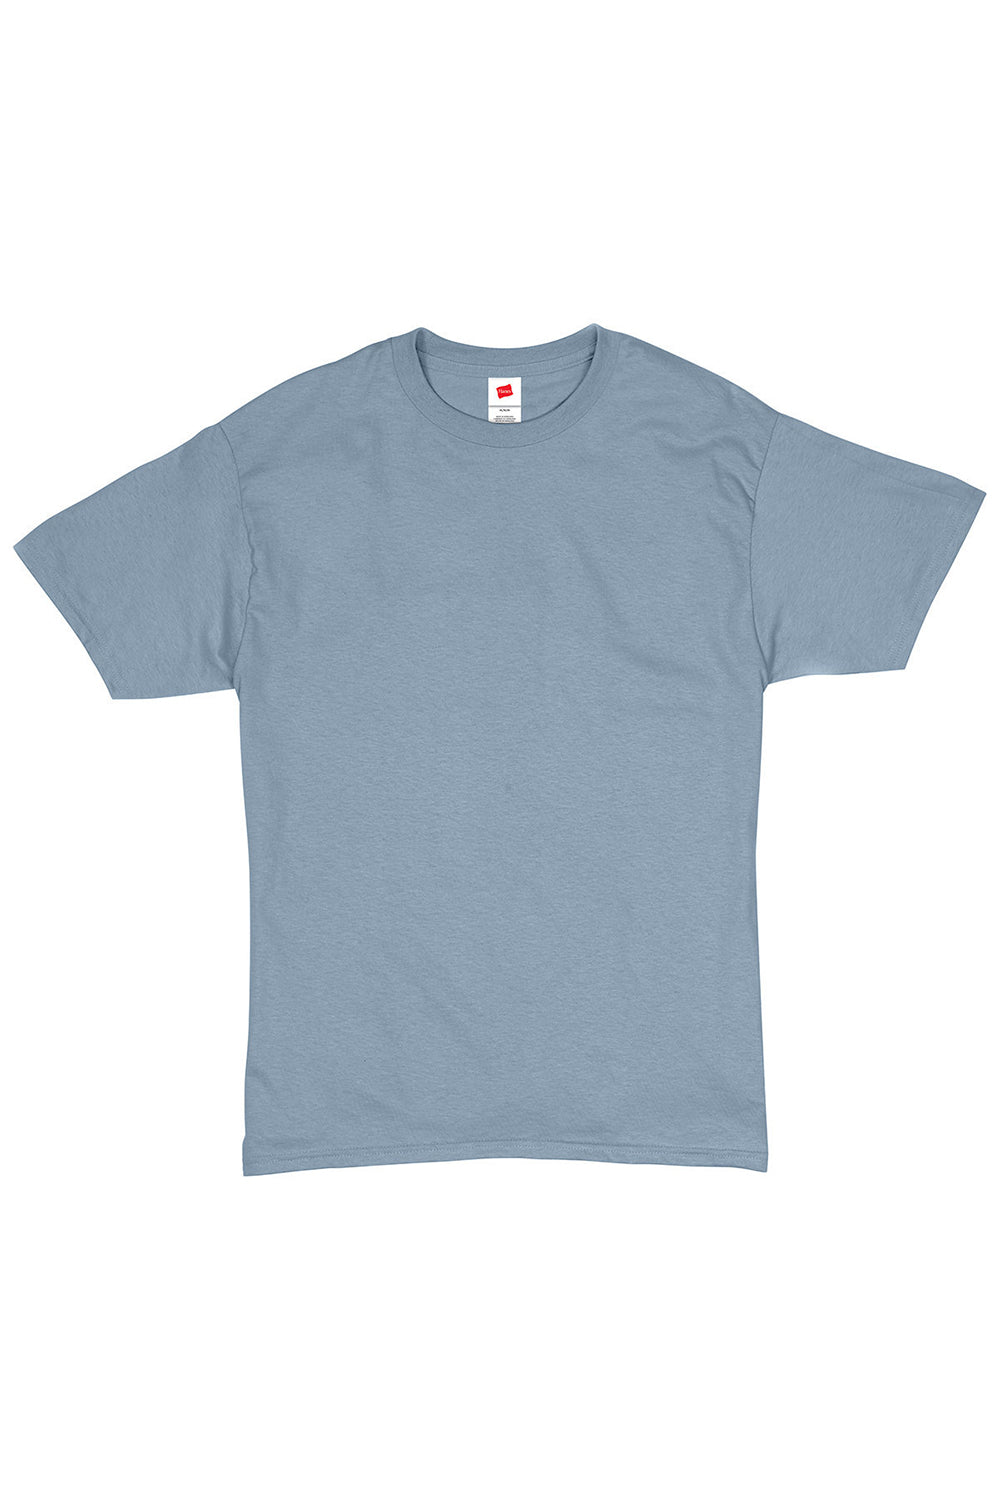 Hanes 5280 Mens ComfortSoft Short Sleeve Crewneck T-Shirt Stonewashed Blue Flat Front